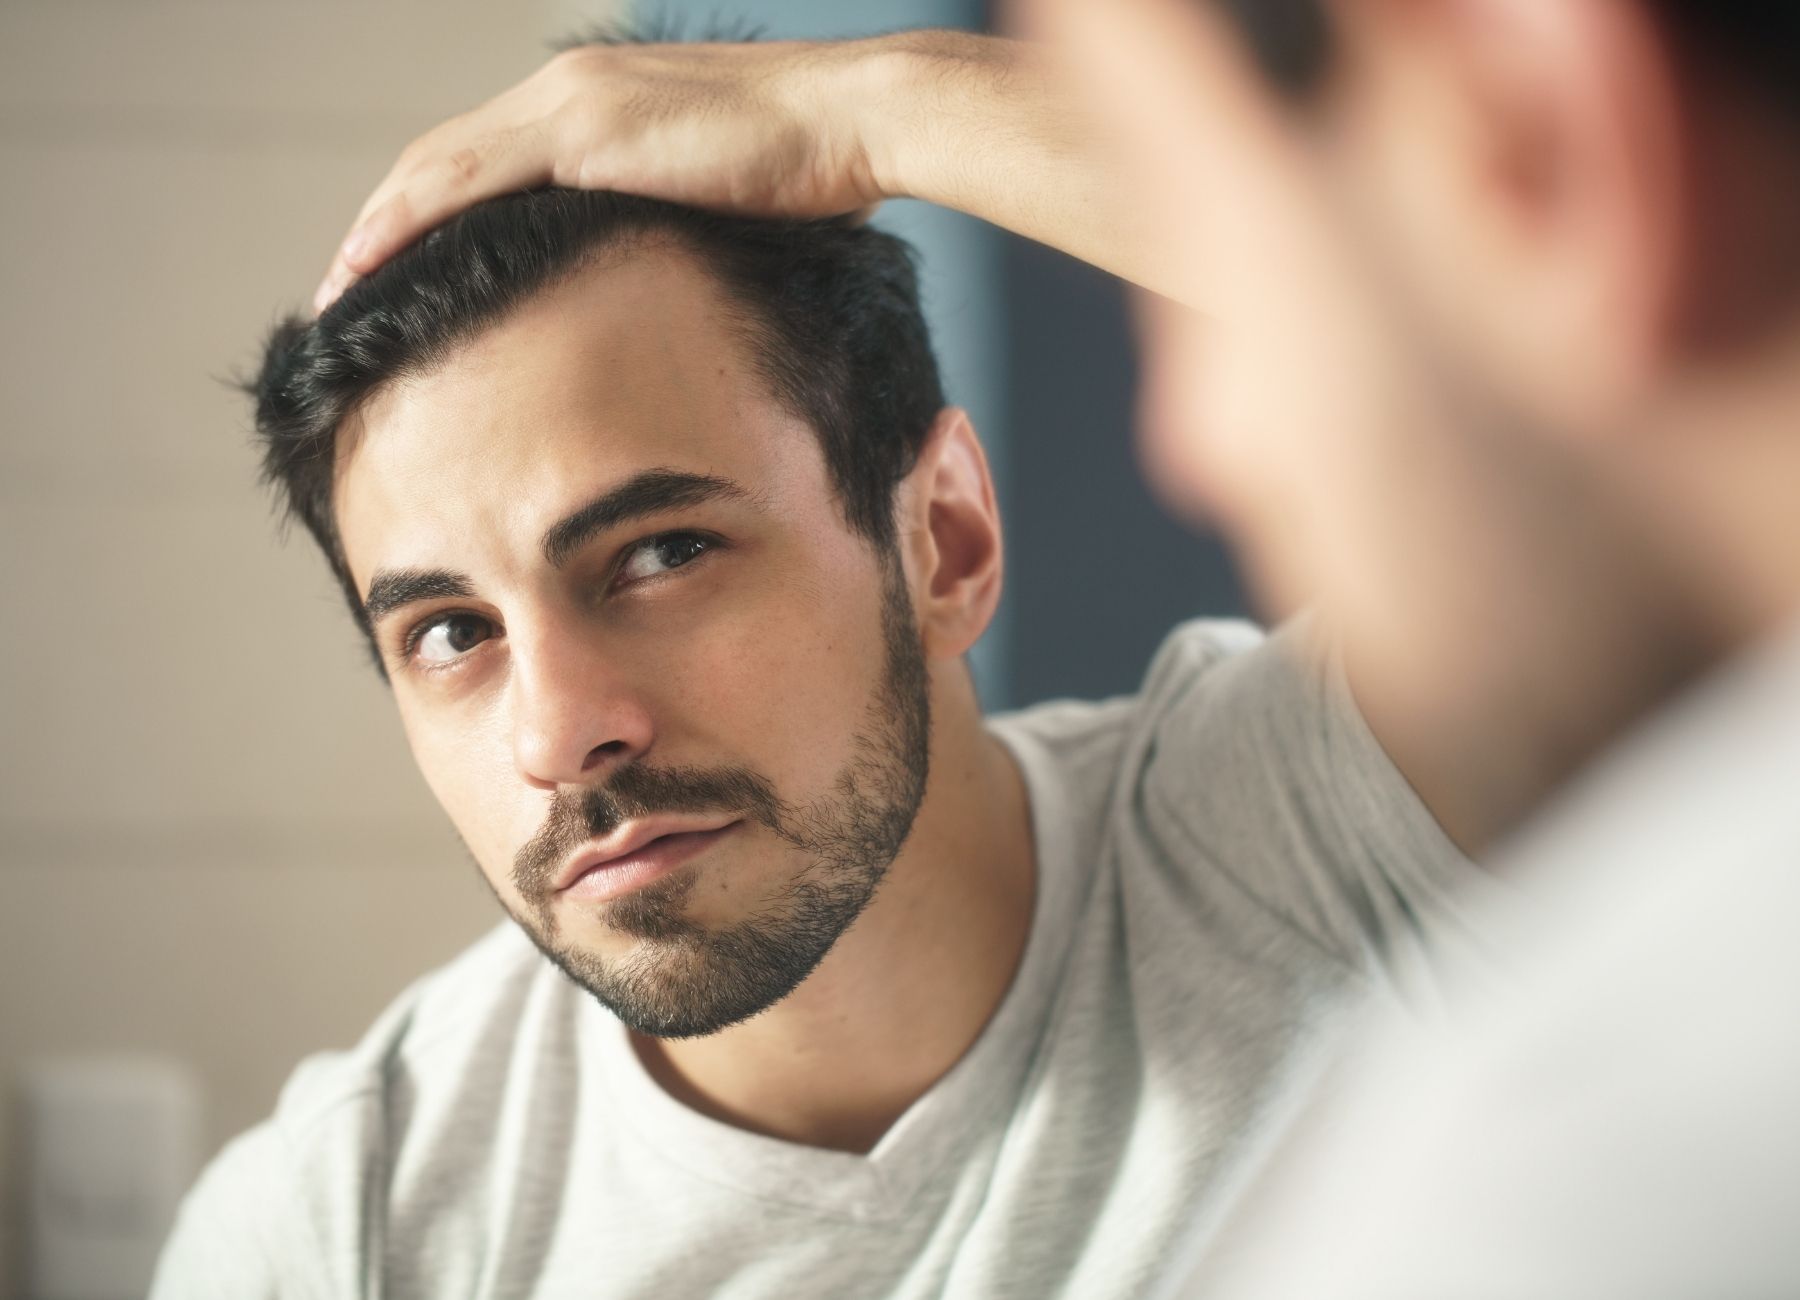 CBD Hemp Oil For Hair Loss: Does It Work?